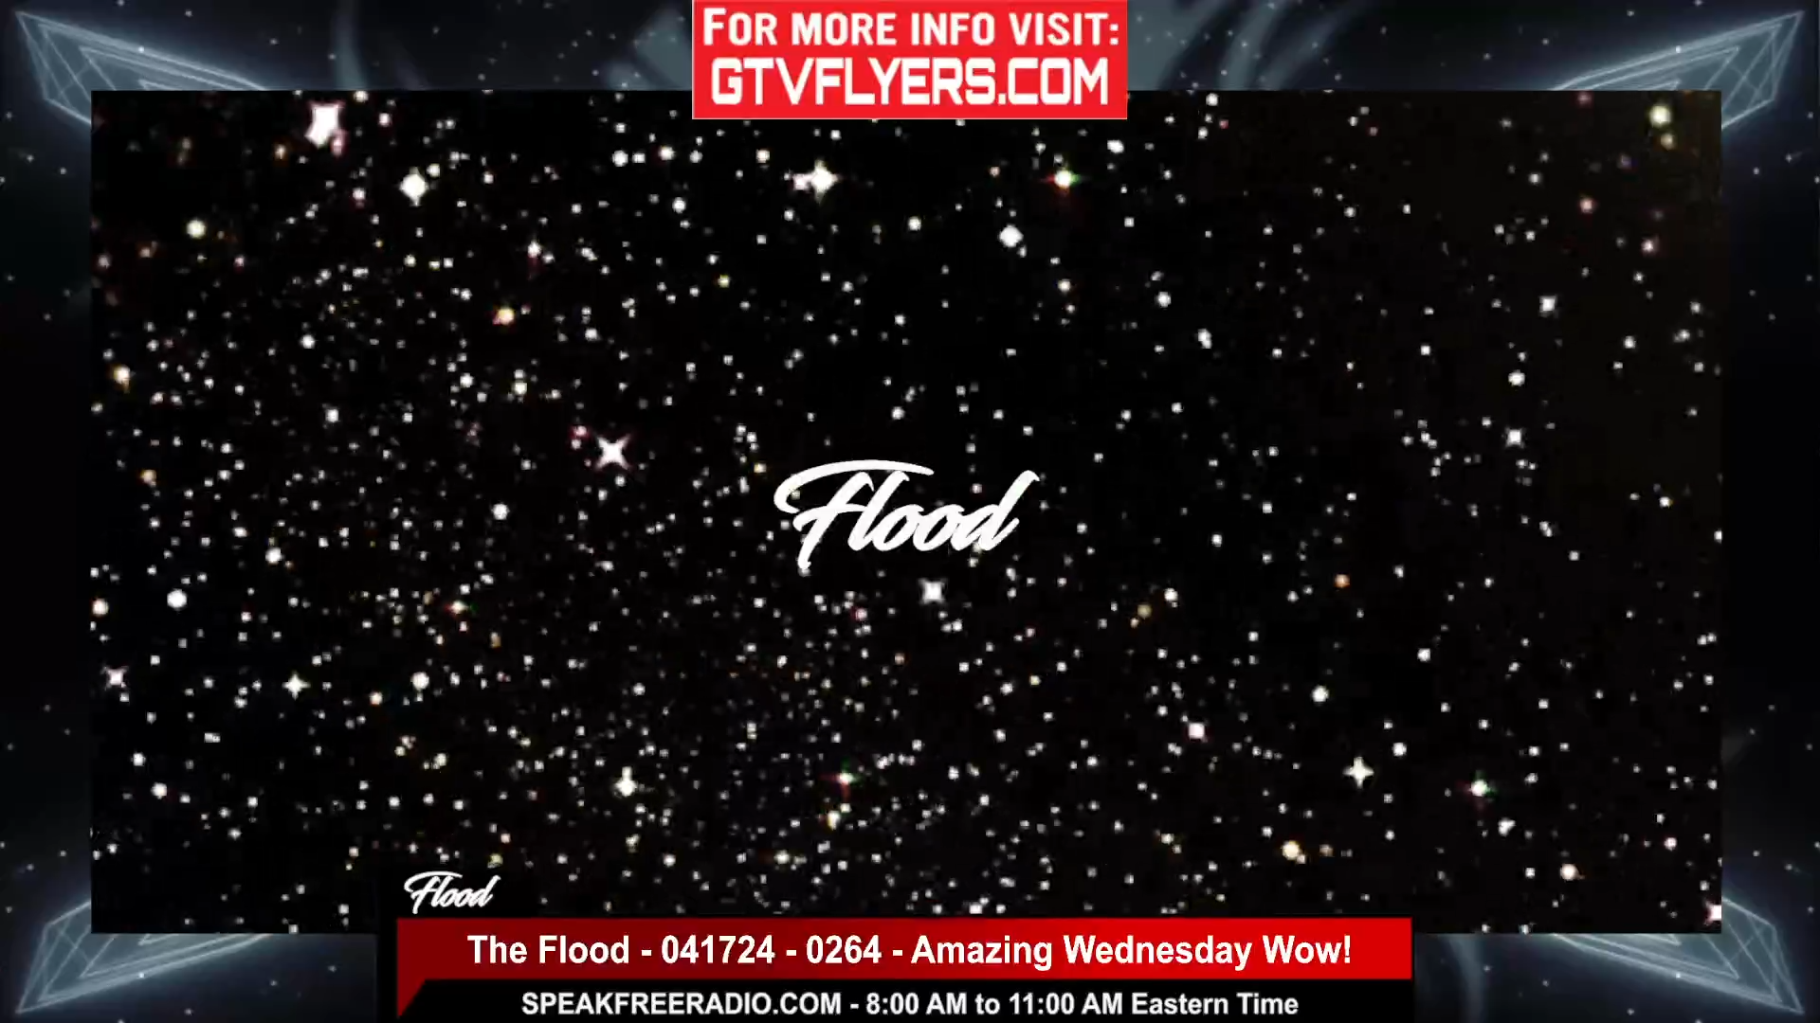 The Flood - 041724 - 0264 - Amazing Wednesday Wow!